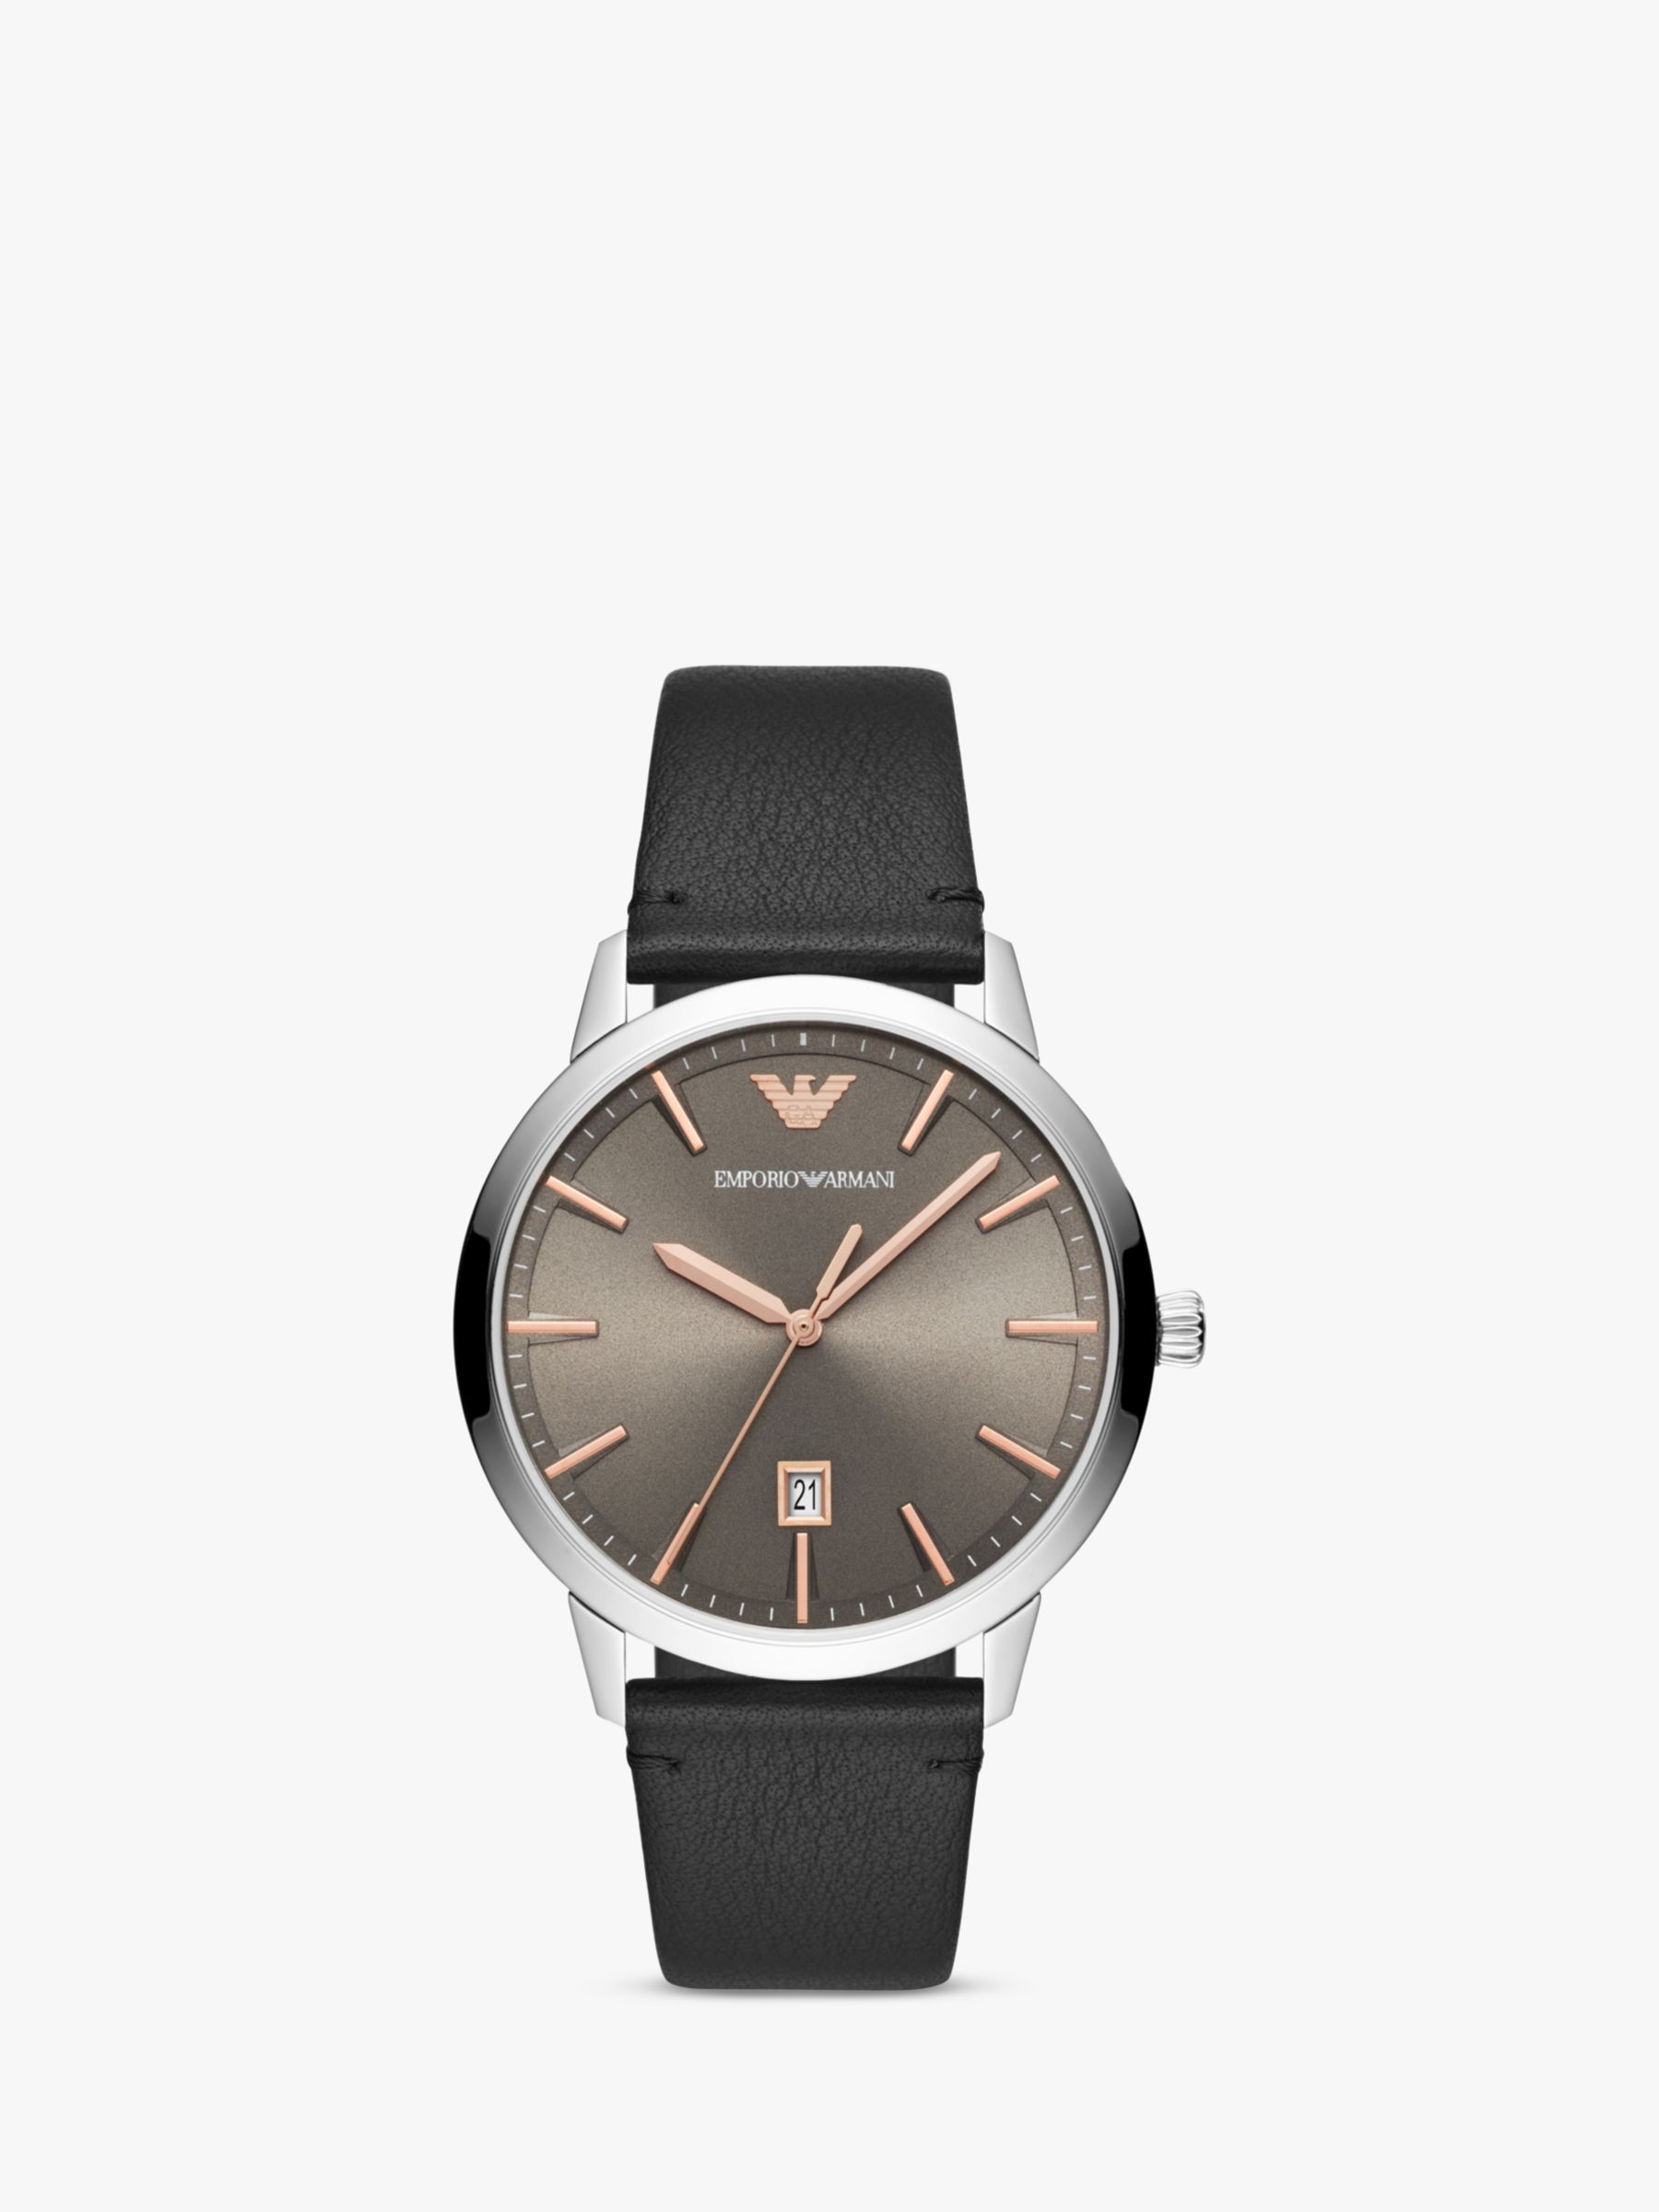 Men's Watches - Emporio Armani, Leather | John Lewis & Partners